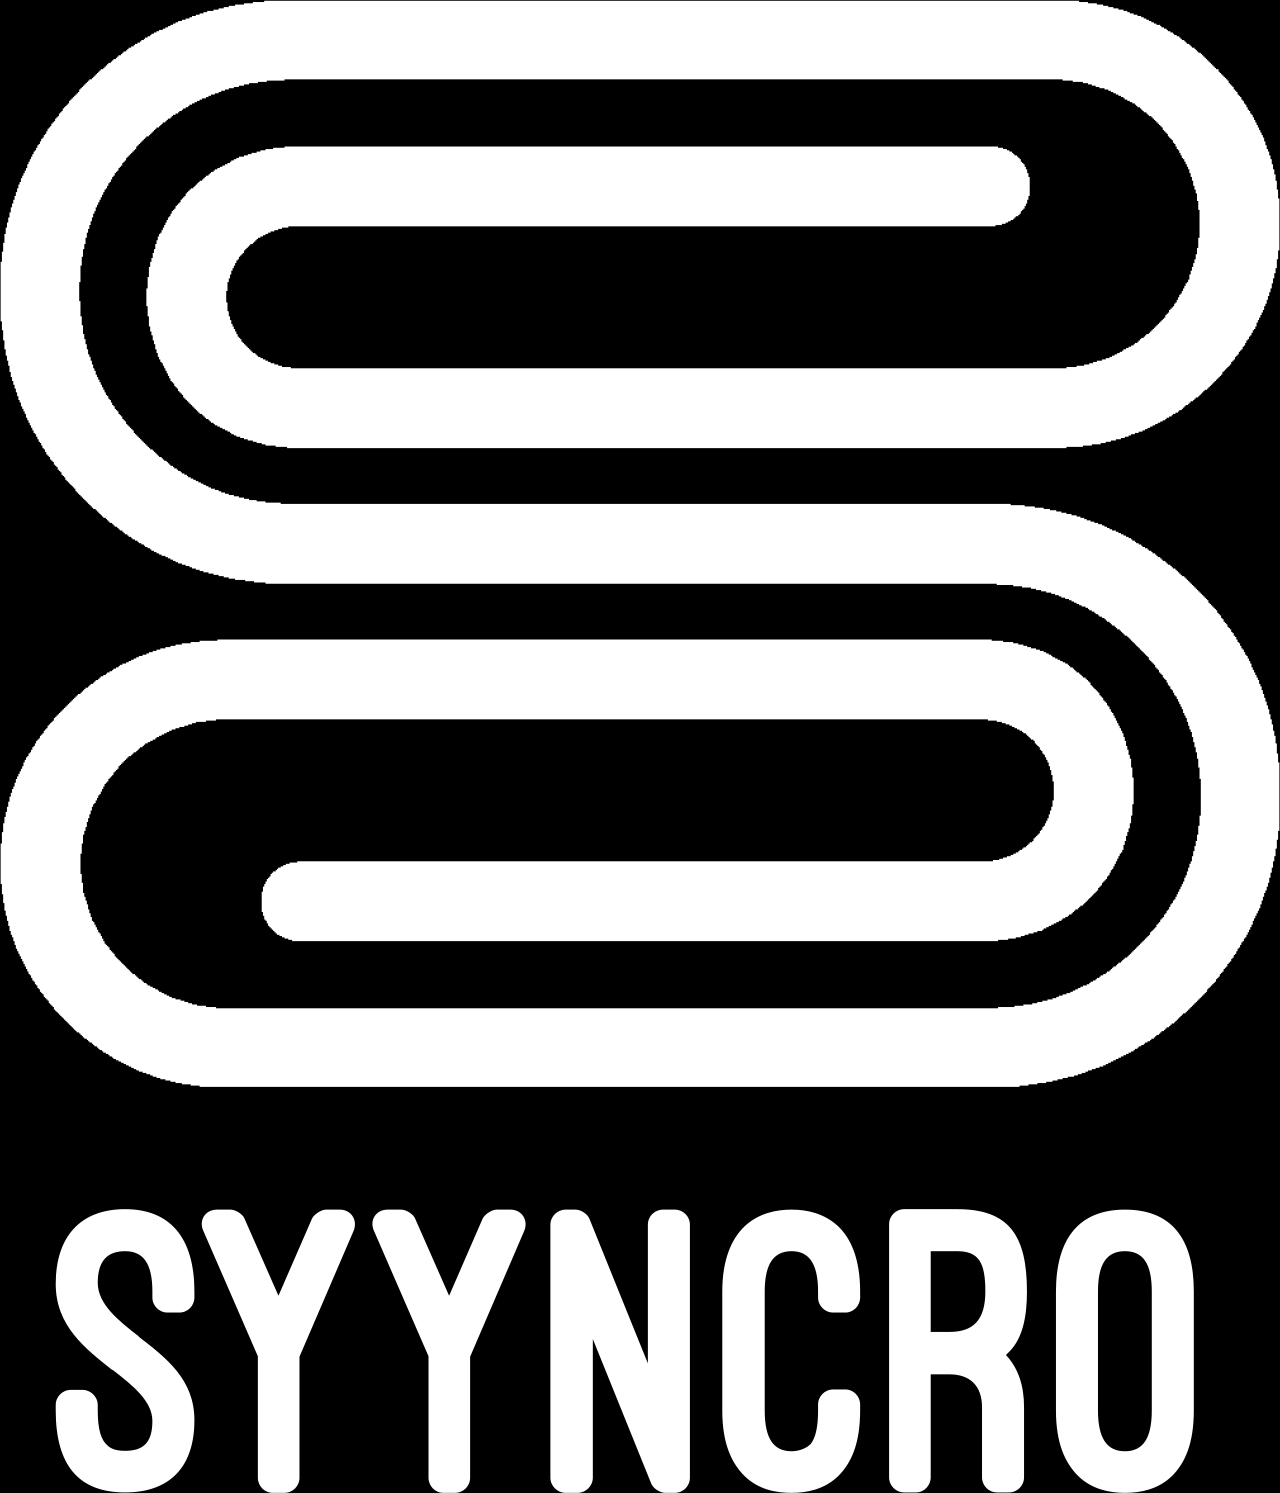 Syyncro